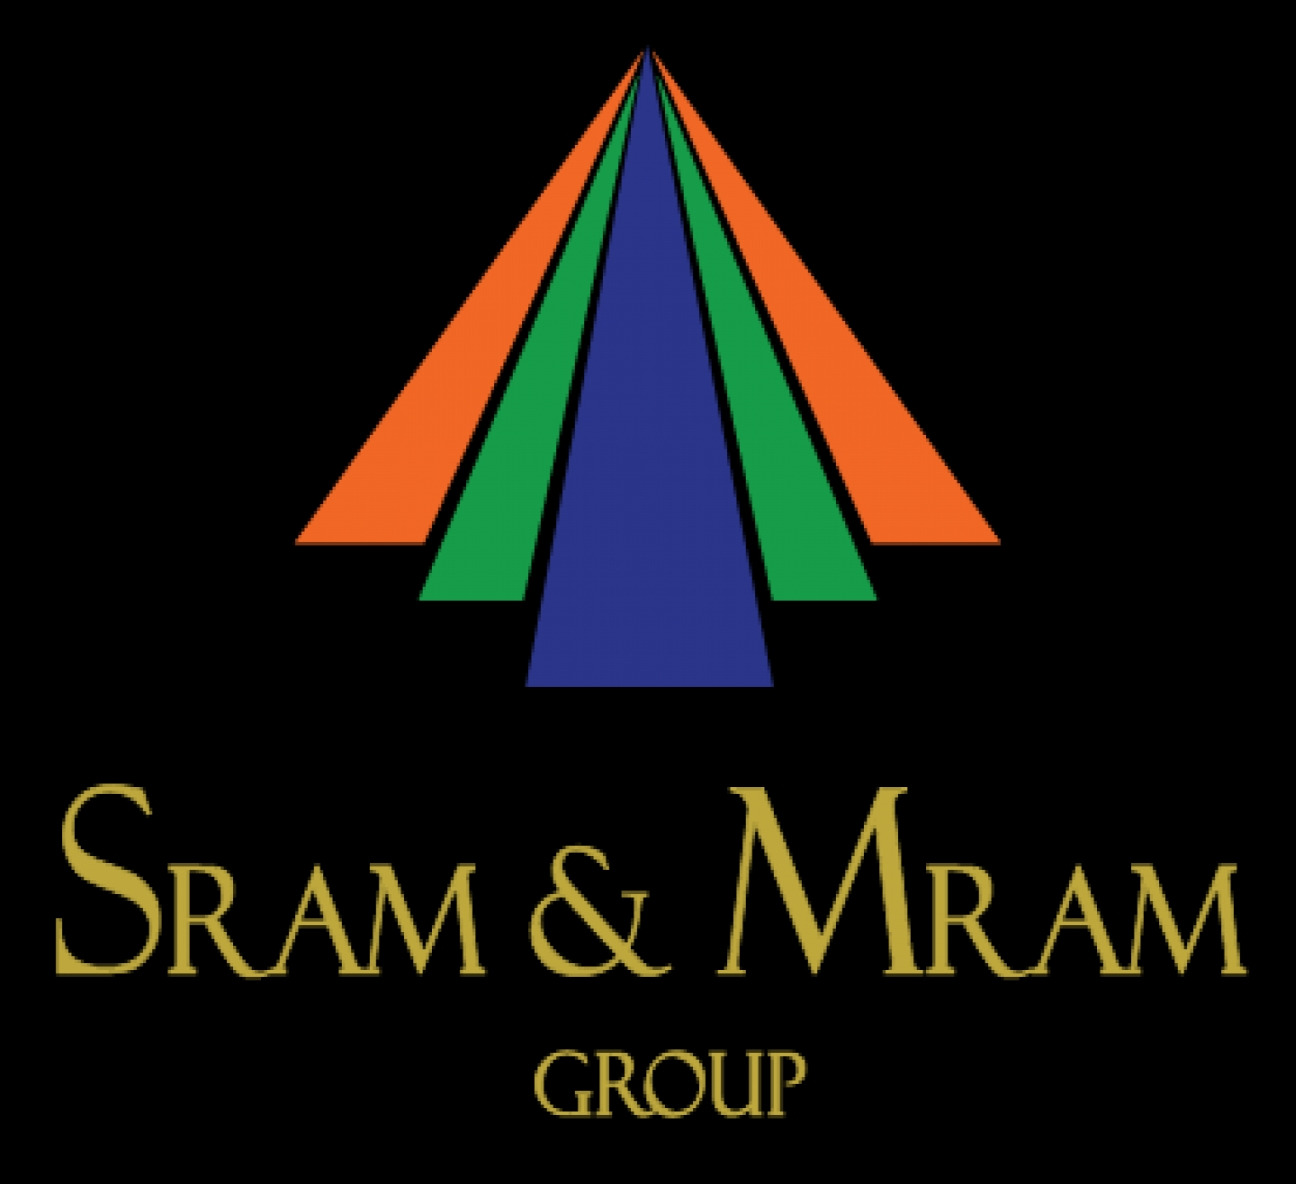 SRAM & MRAM Group Links Historic Agreement with Csepel Holding Nyrt